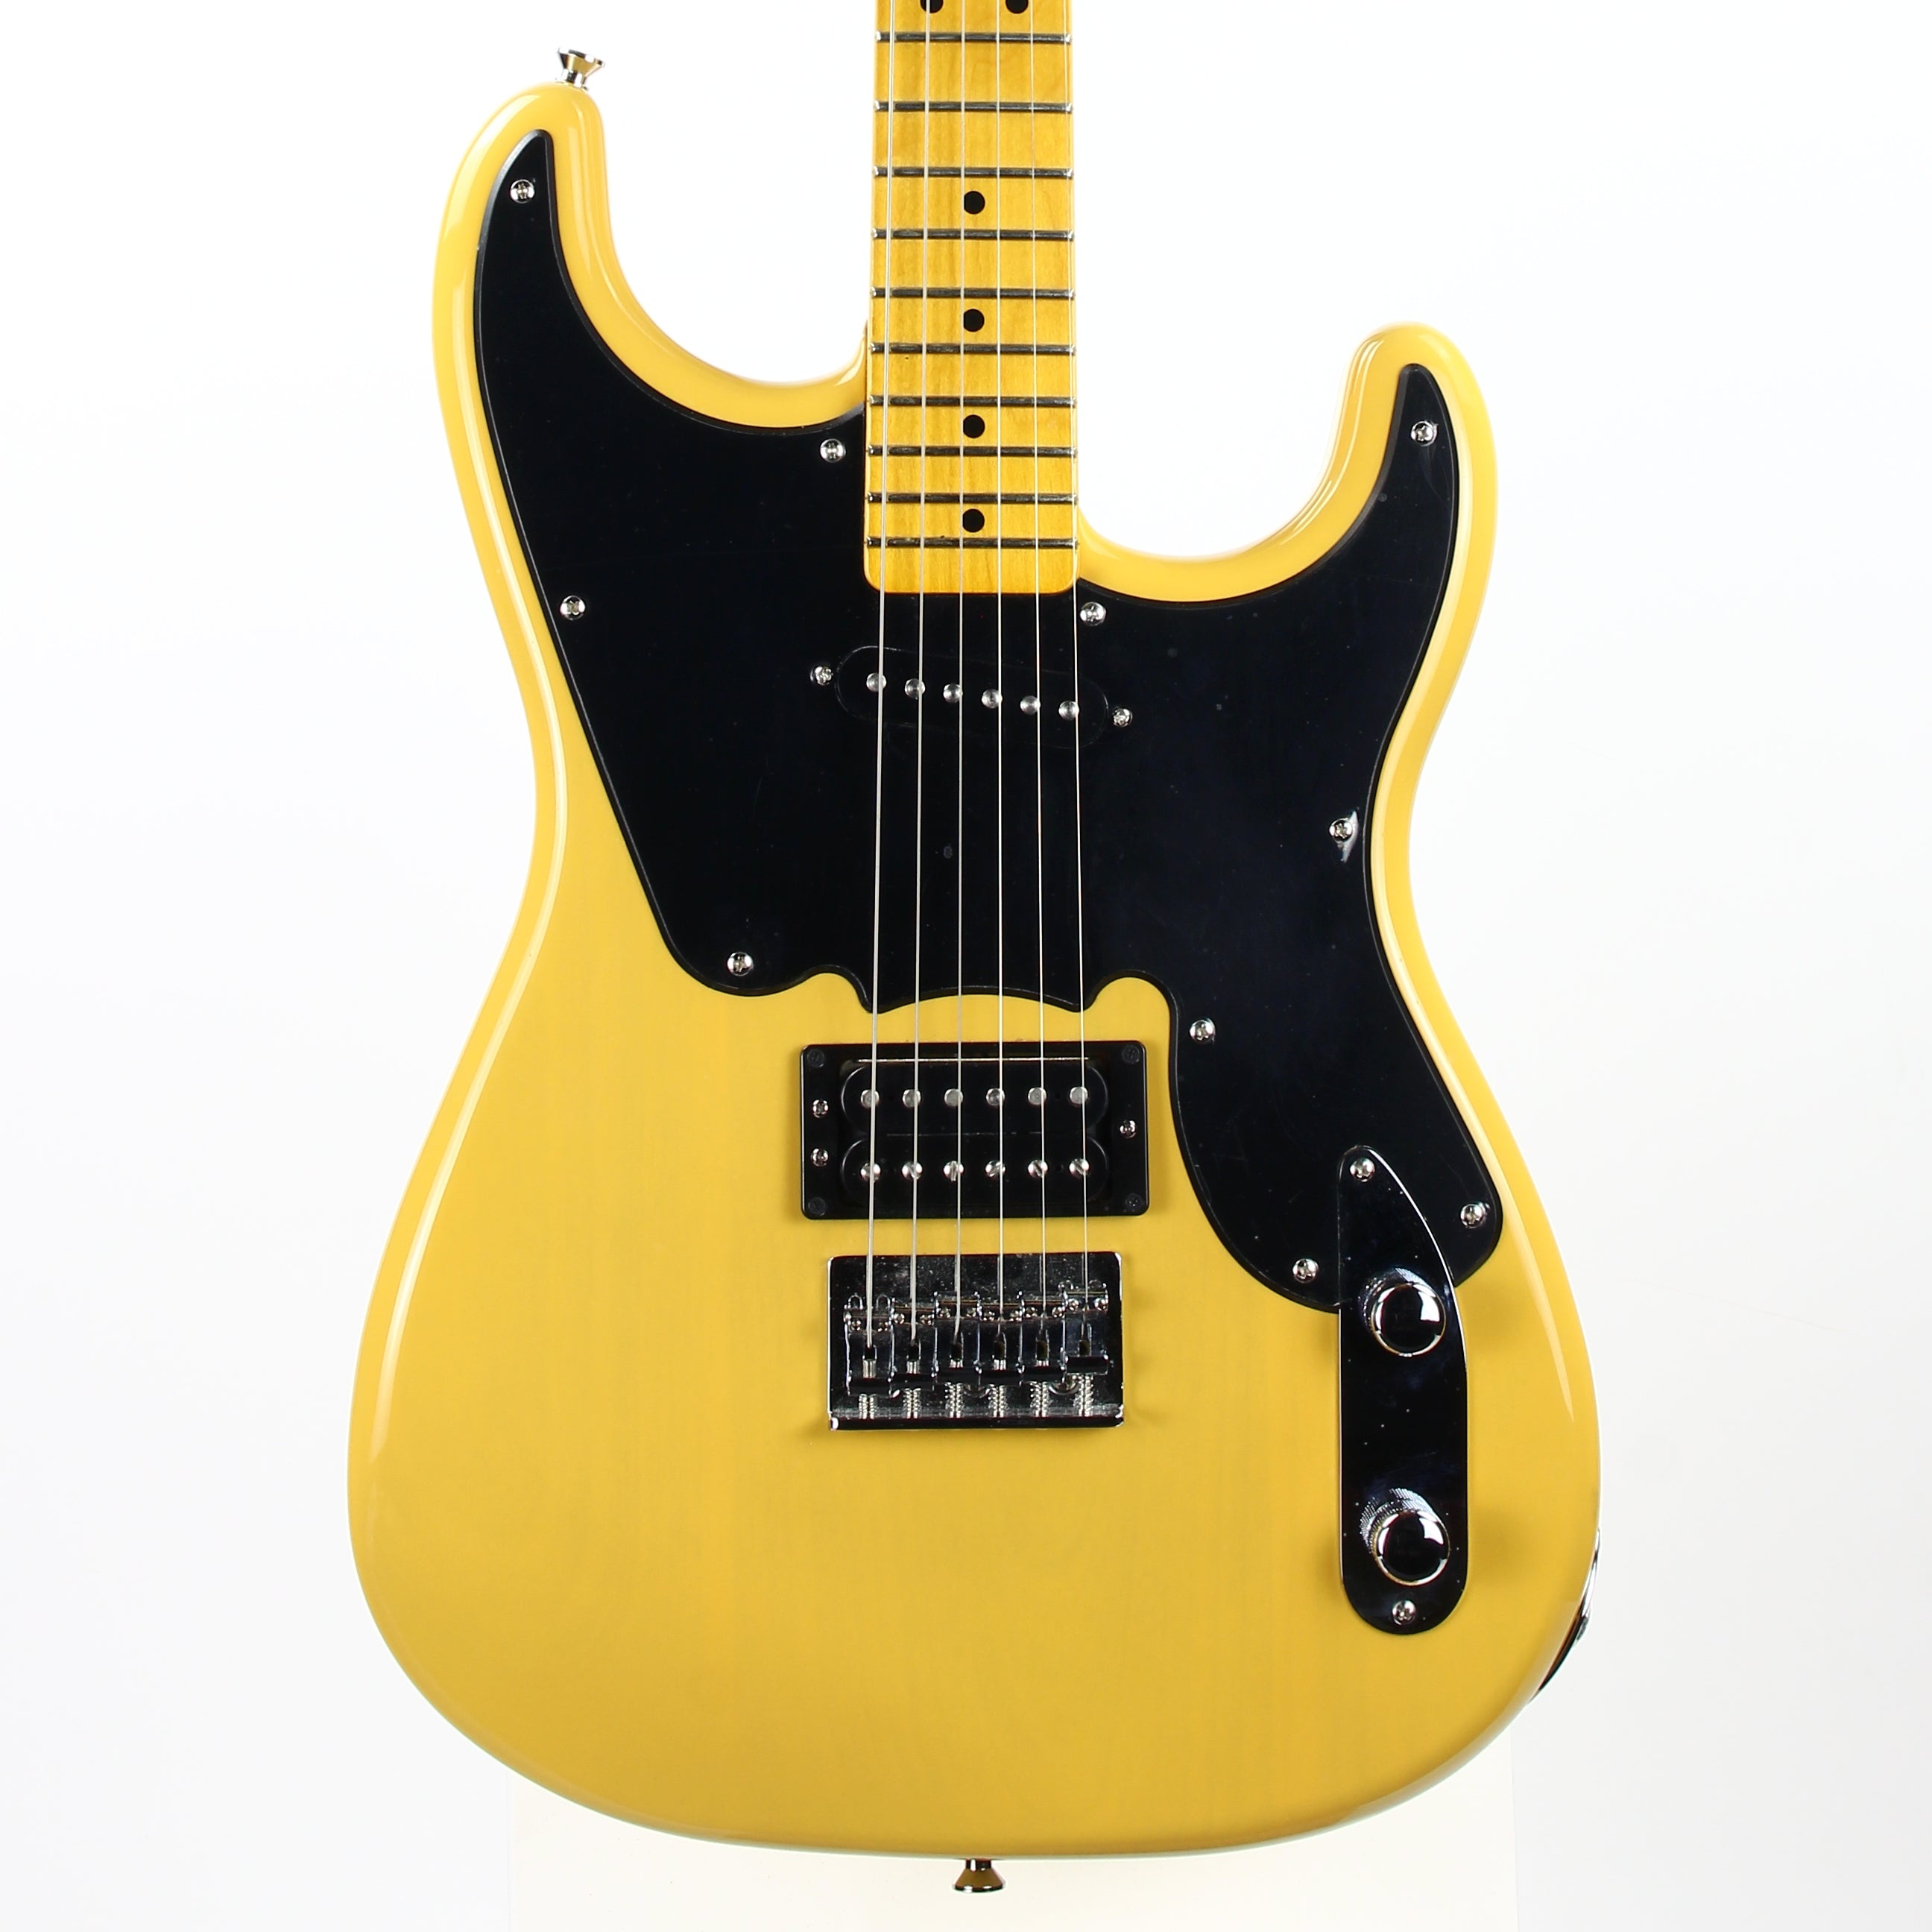 *SOLD*  2011 Fender Made in Japan Pawn Shop '51 Telecaster Stratocaster Blonde - strat/tele hybrid MIJ!